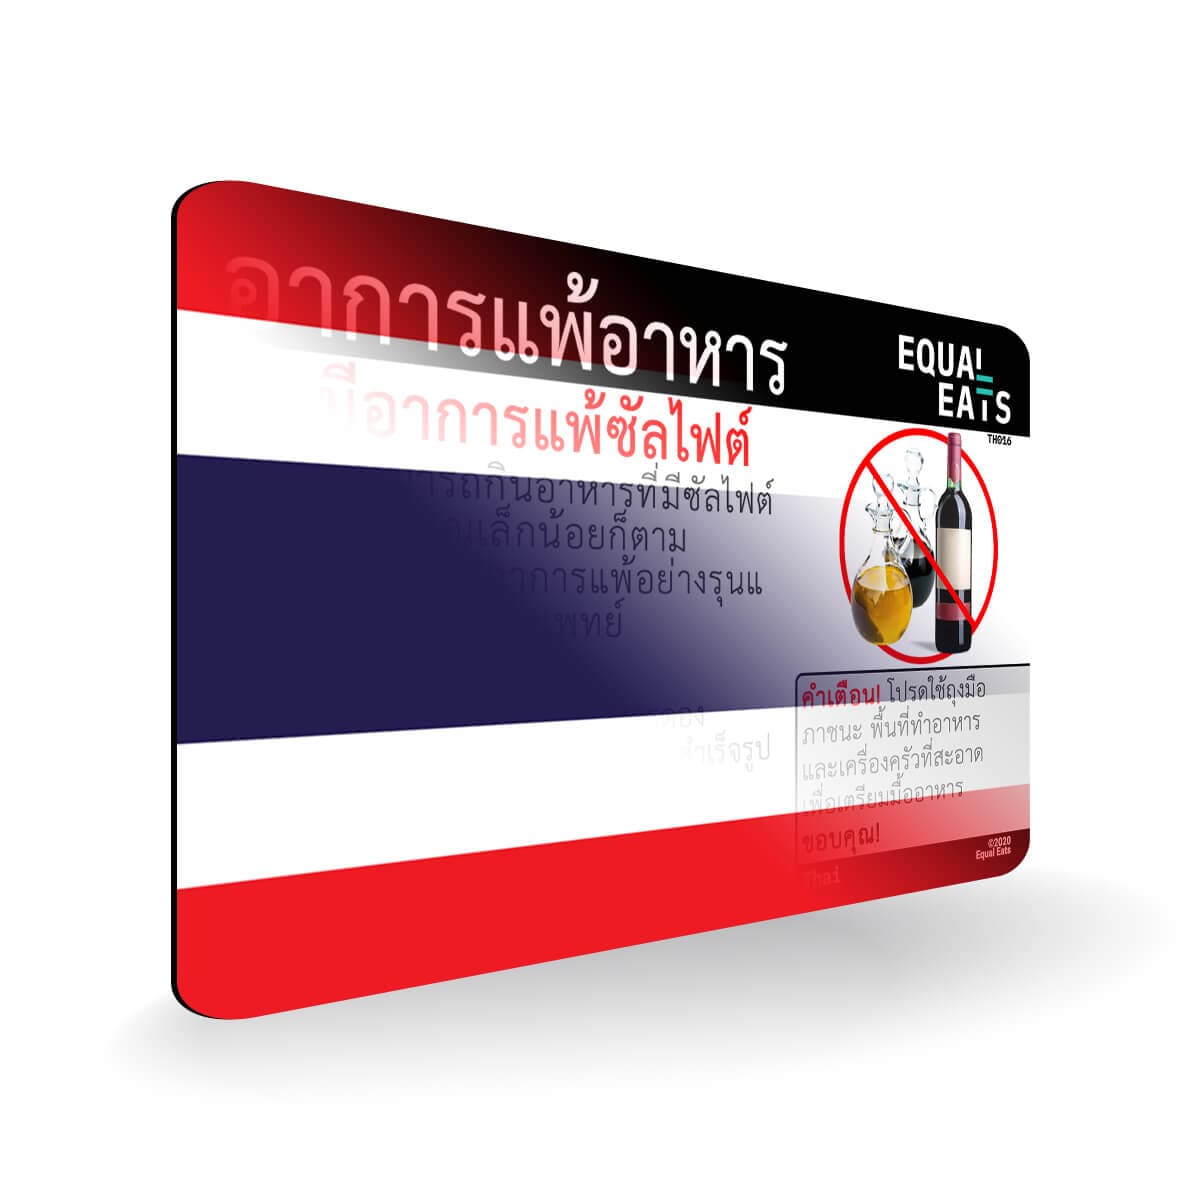 Sulfite Allergy in Thai. Sulfite Allergy Card for Thailand